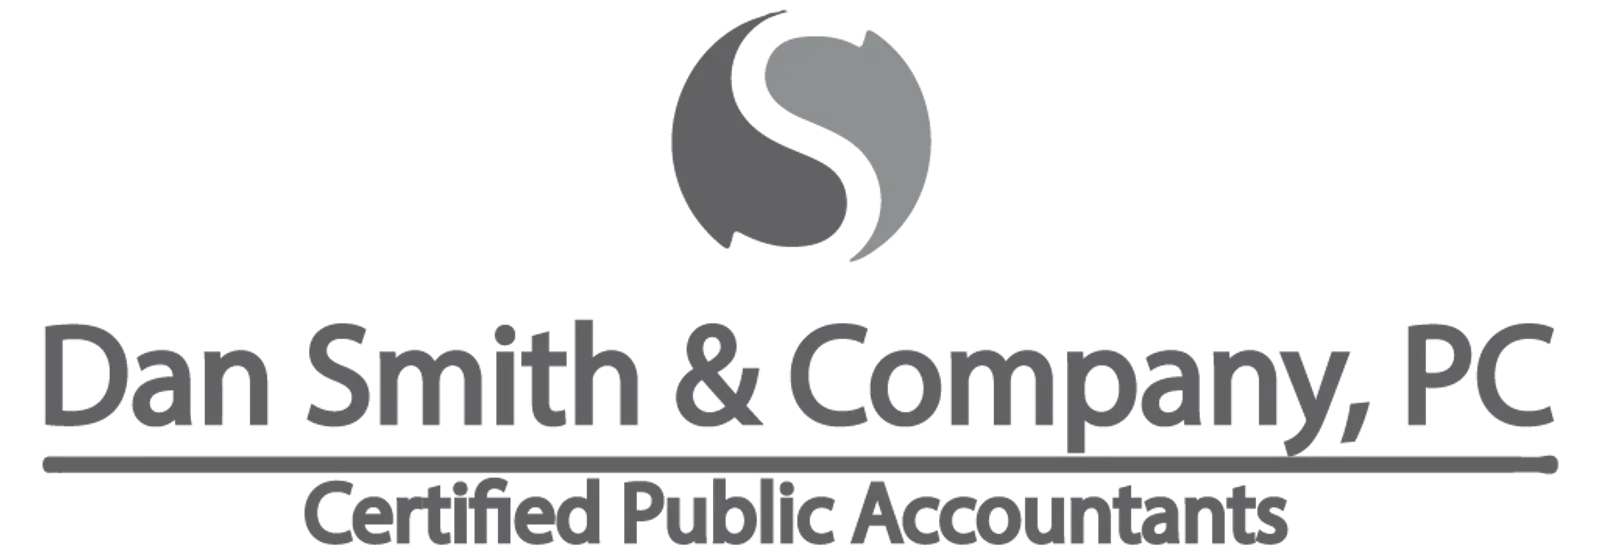 Dan Smith logo